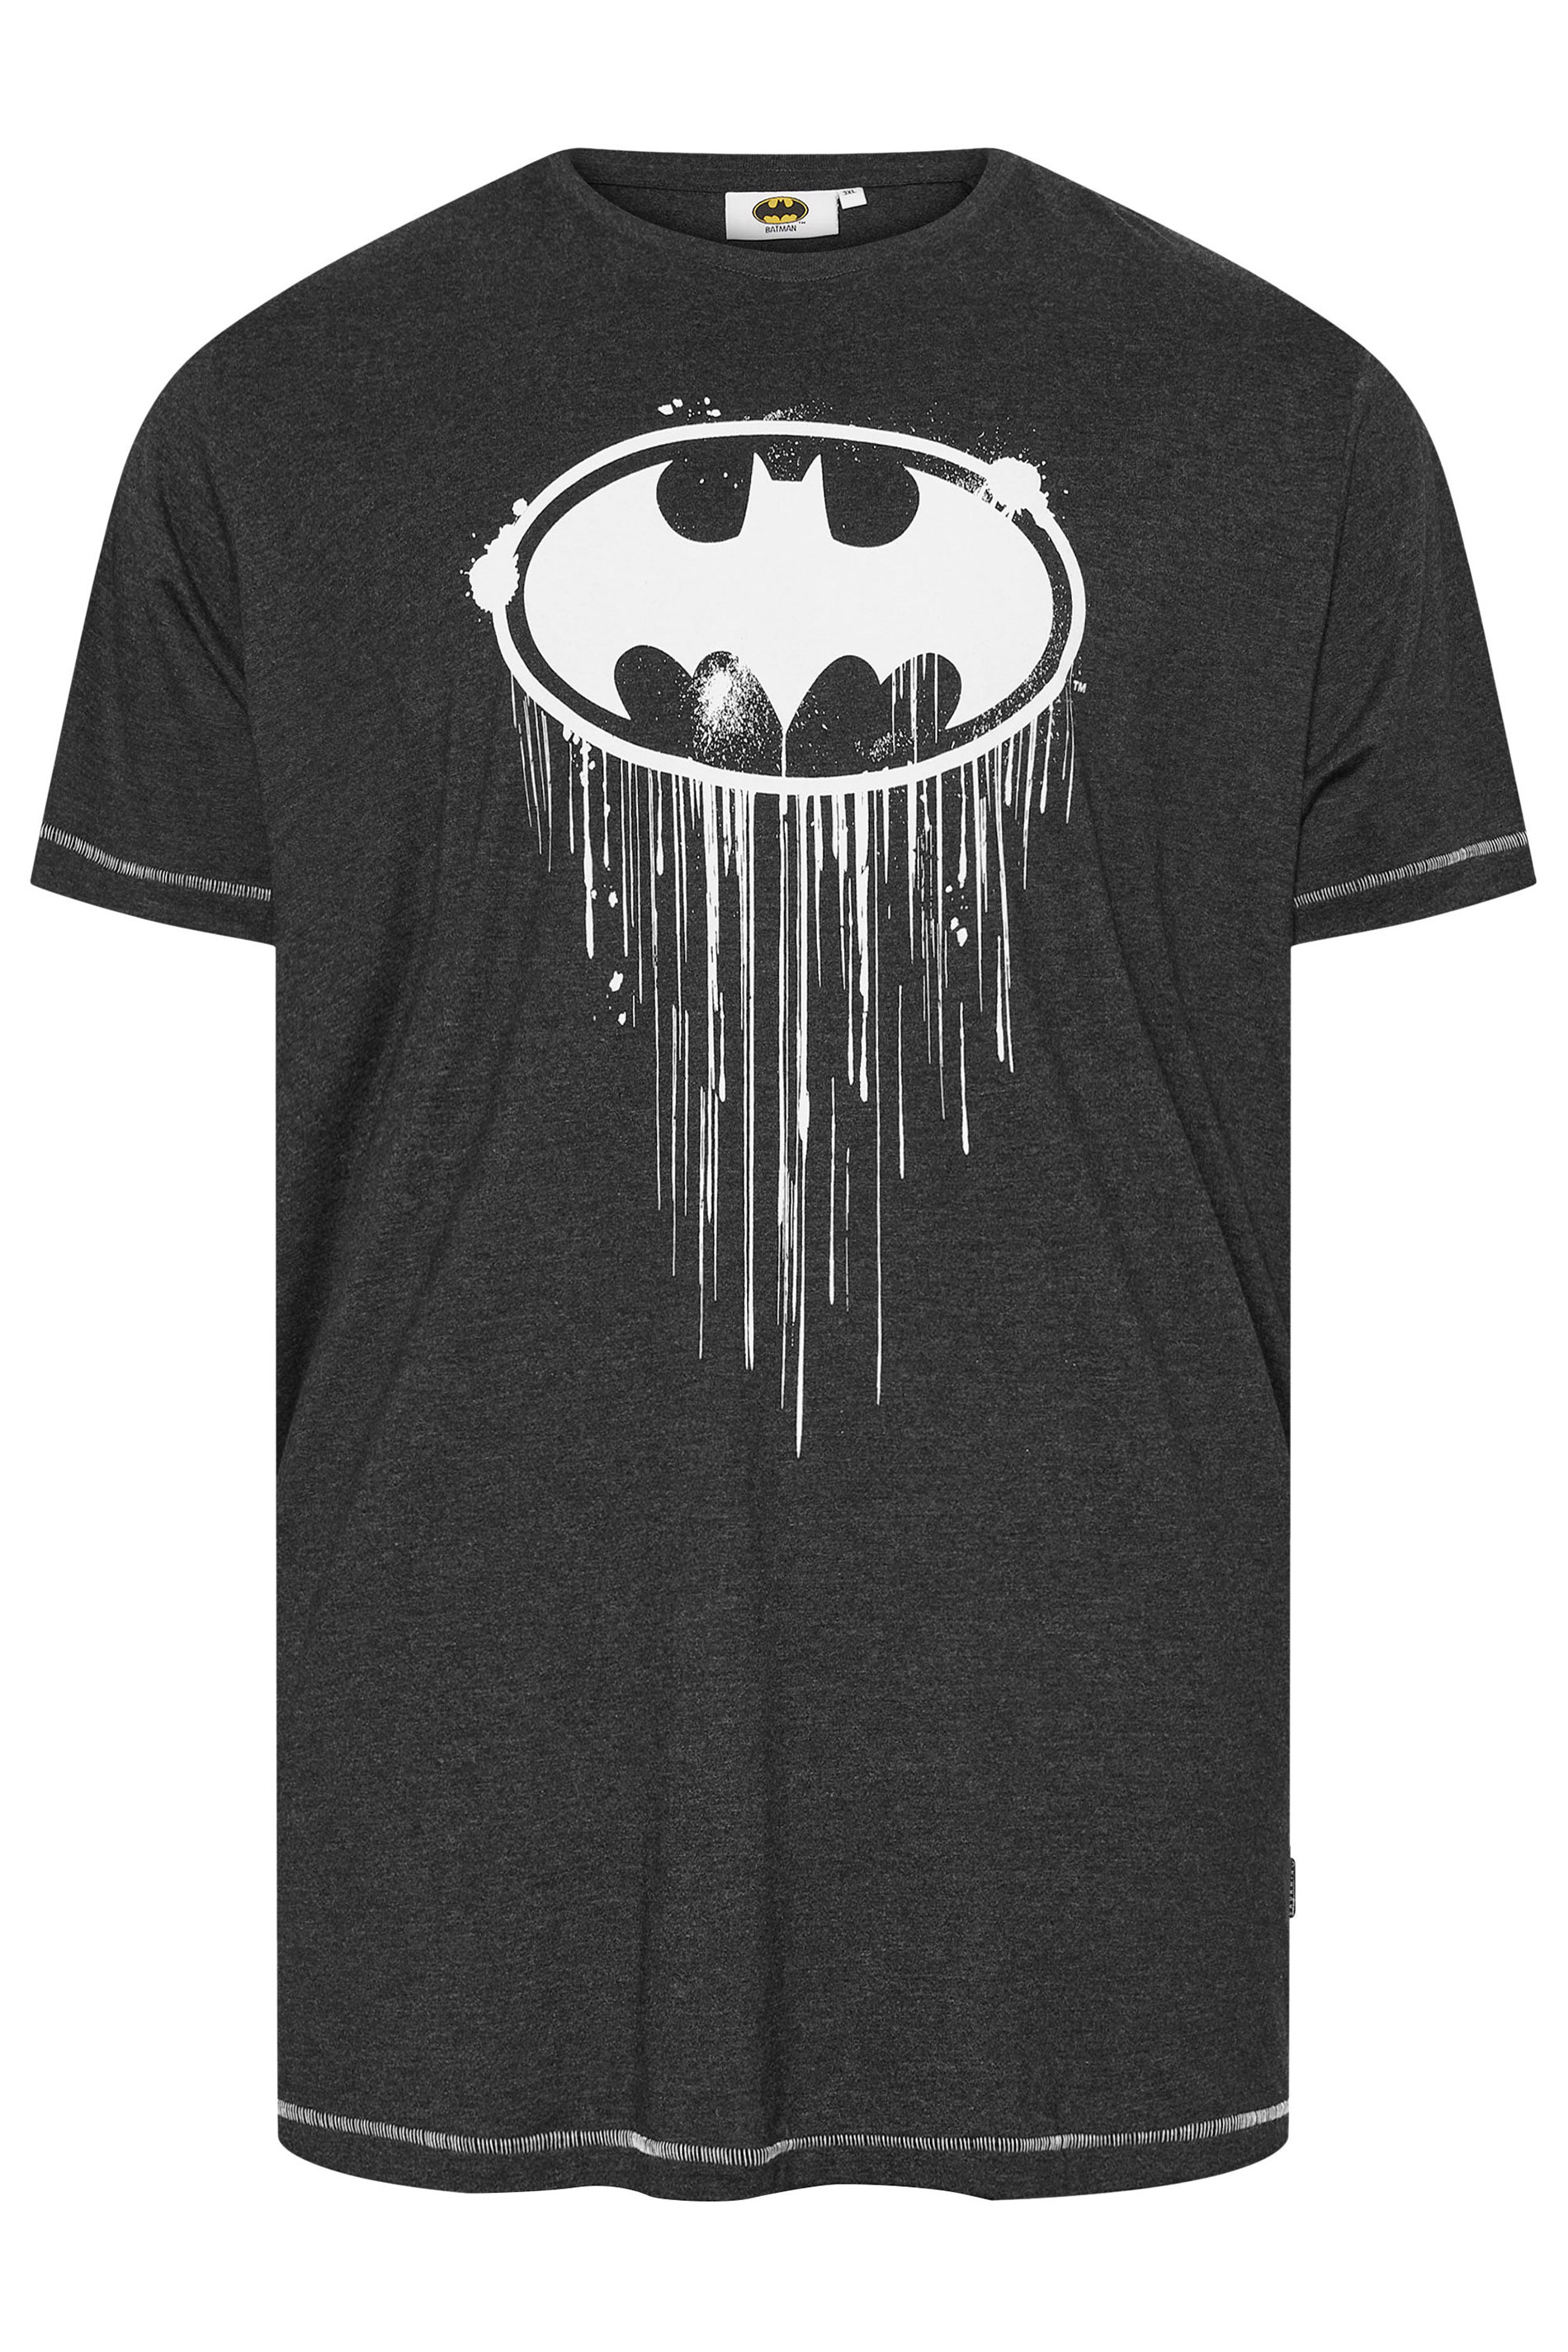 BadRhino Big & Tall Black Batman Graphic T-Shirt | BadRhino 3